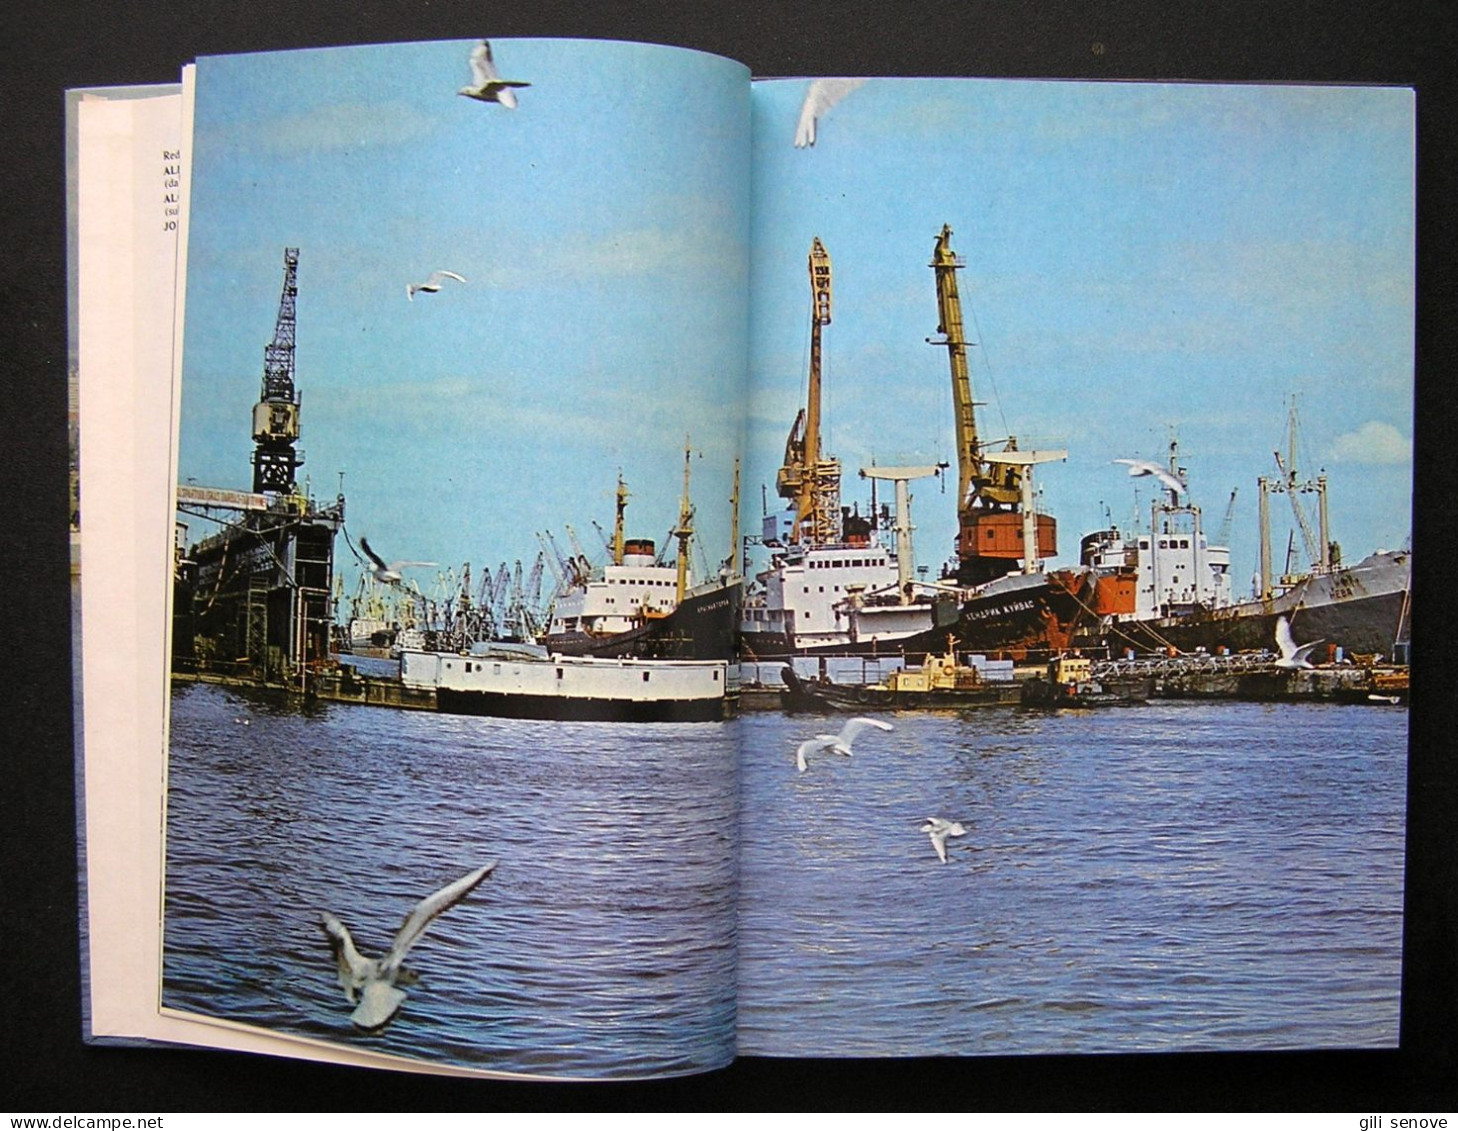 Lithuanian Book / Klaipėda 1983 - Ontwikkeling